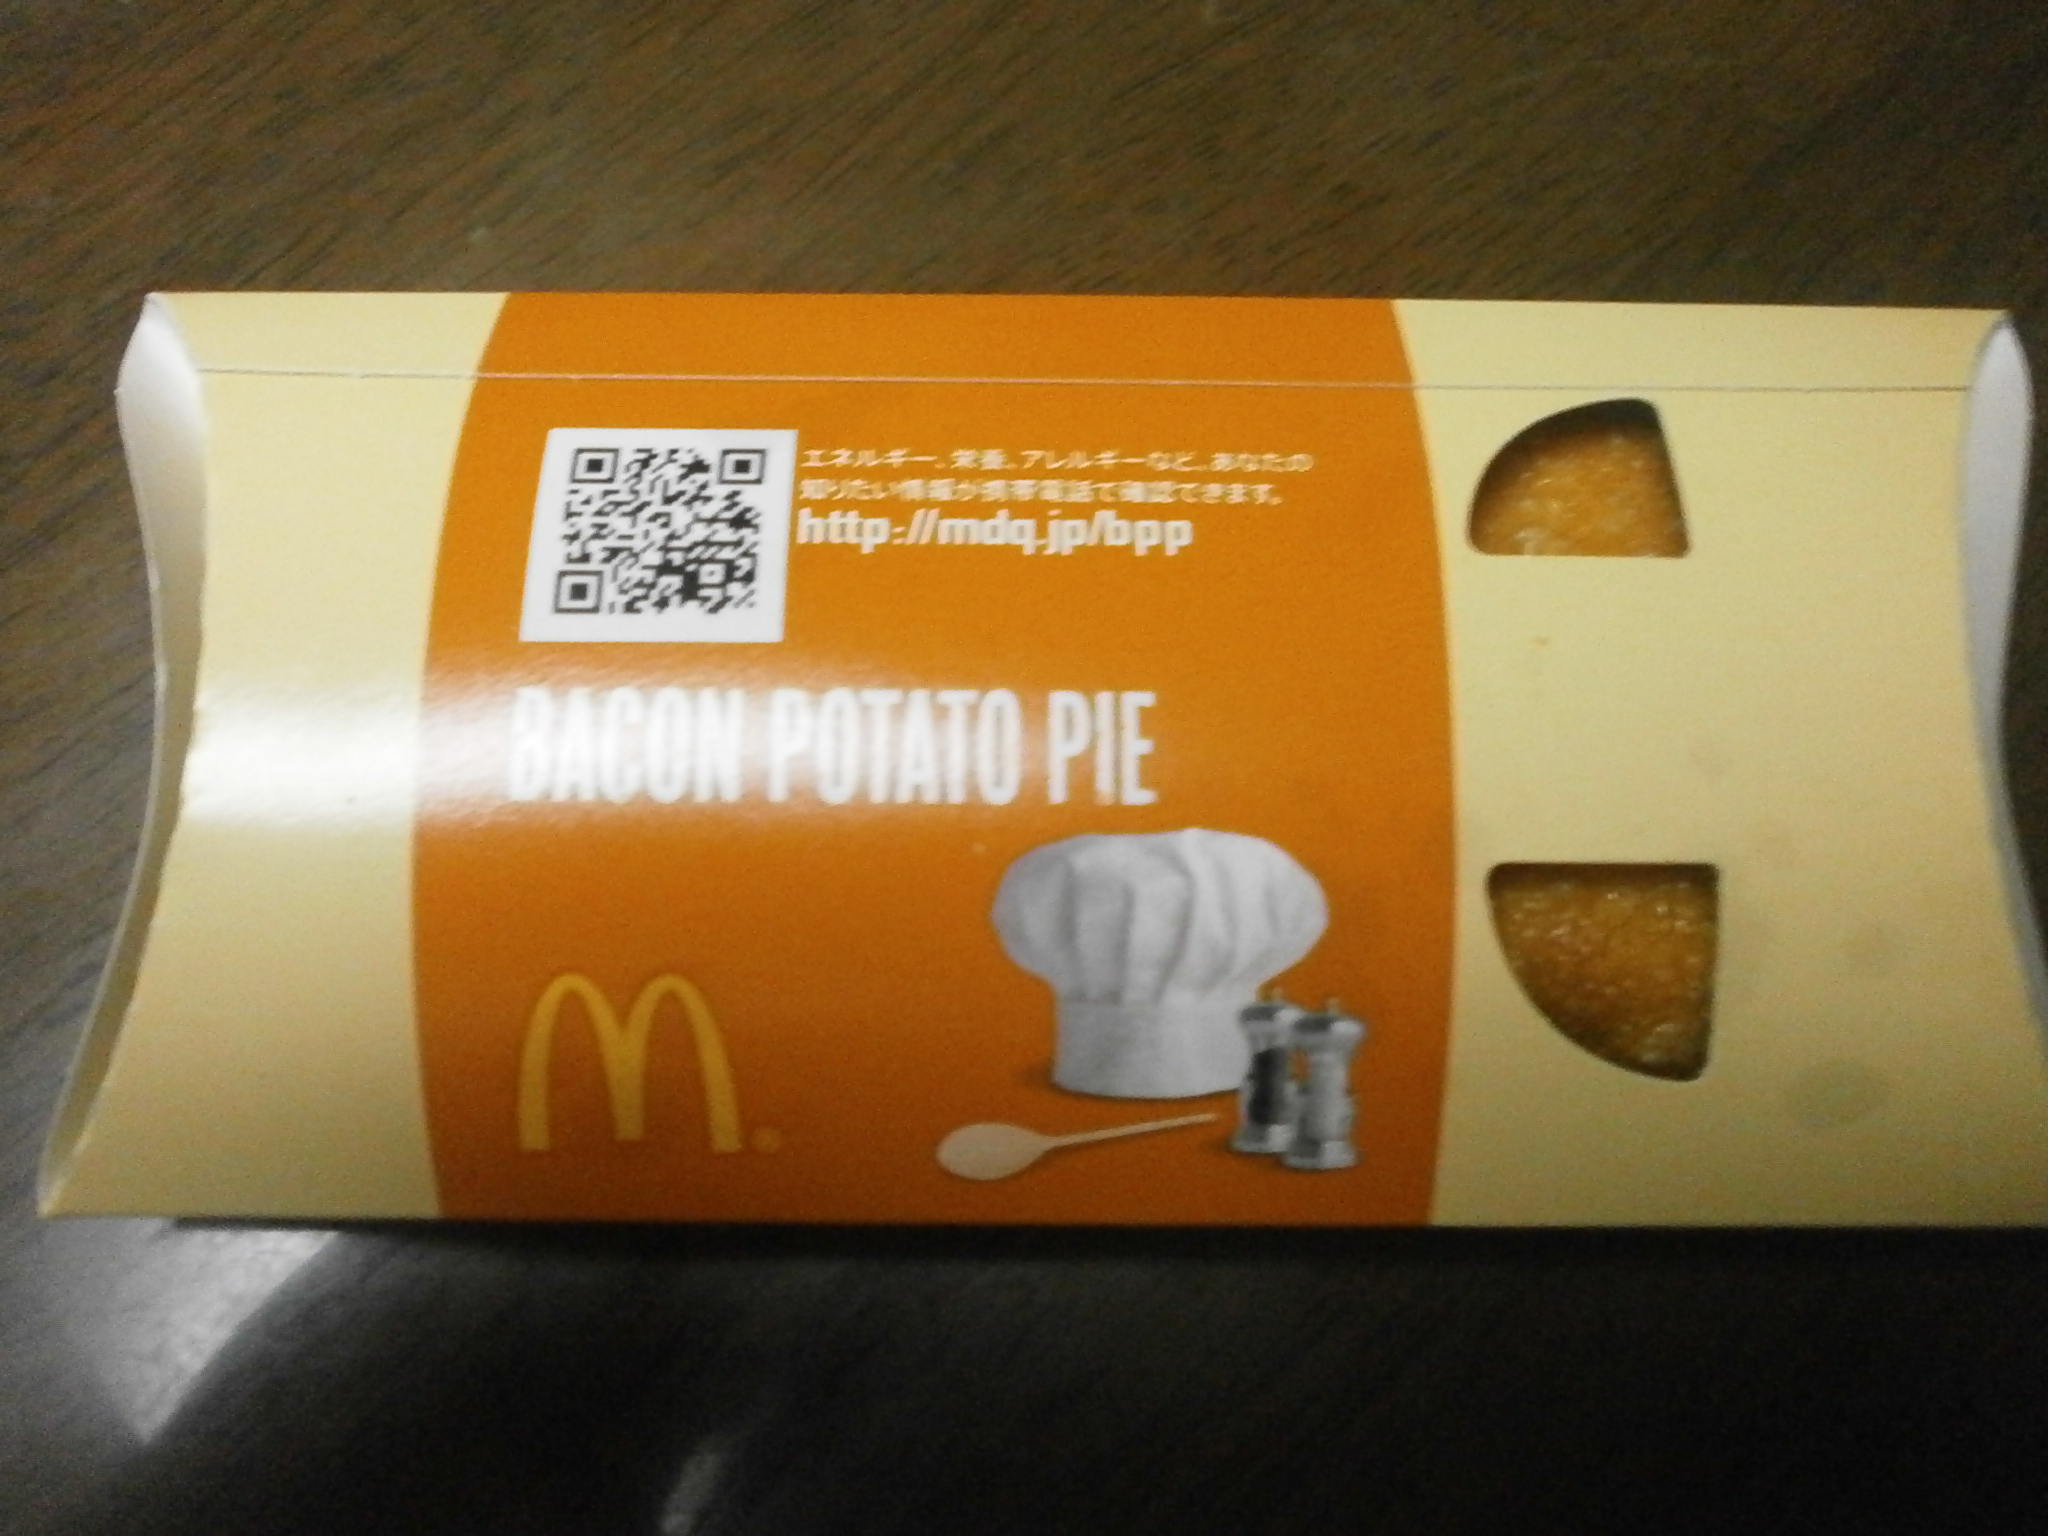 Batata Bacon Pie (McDonald)